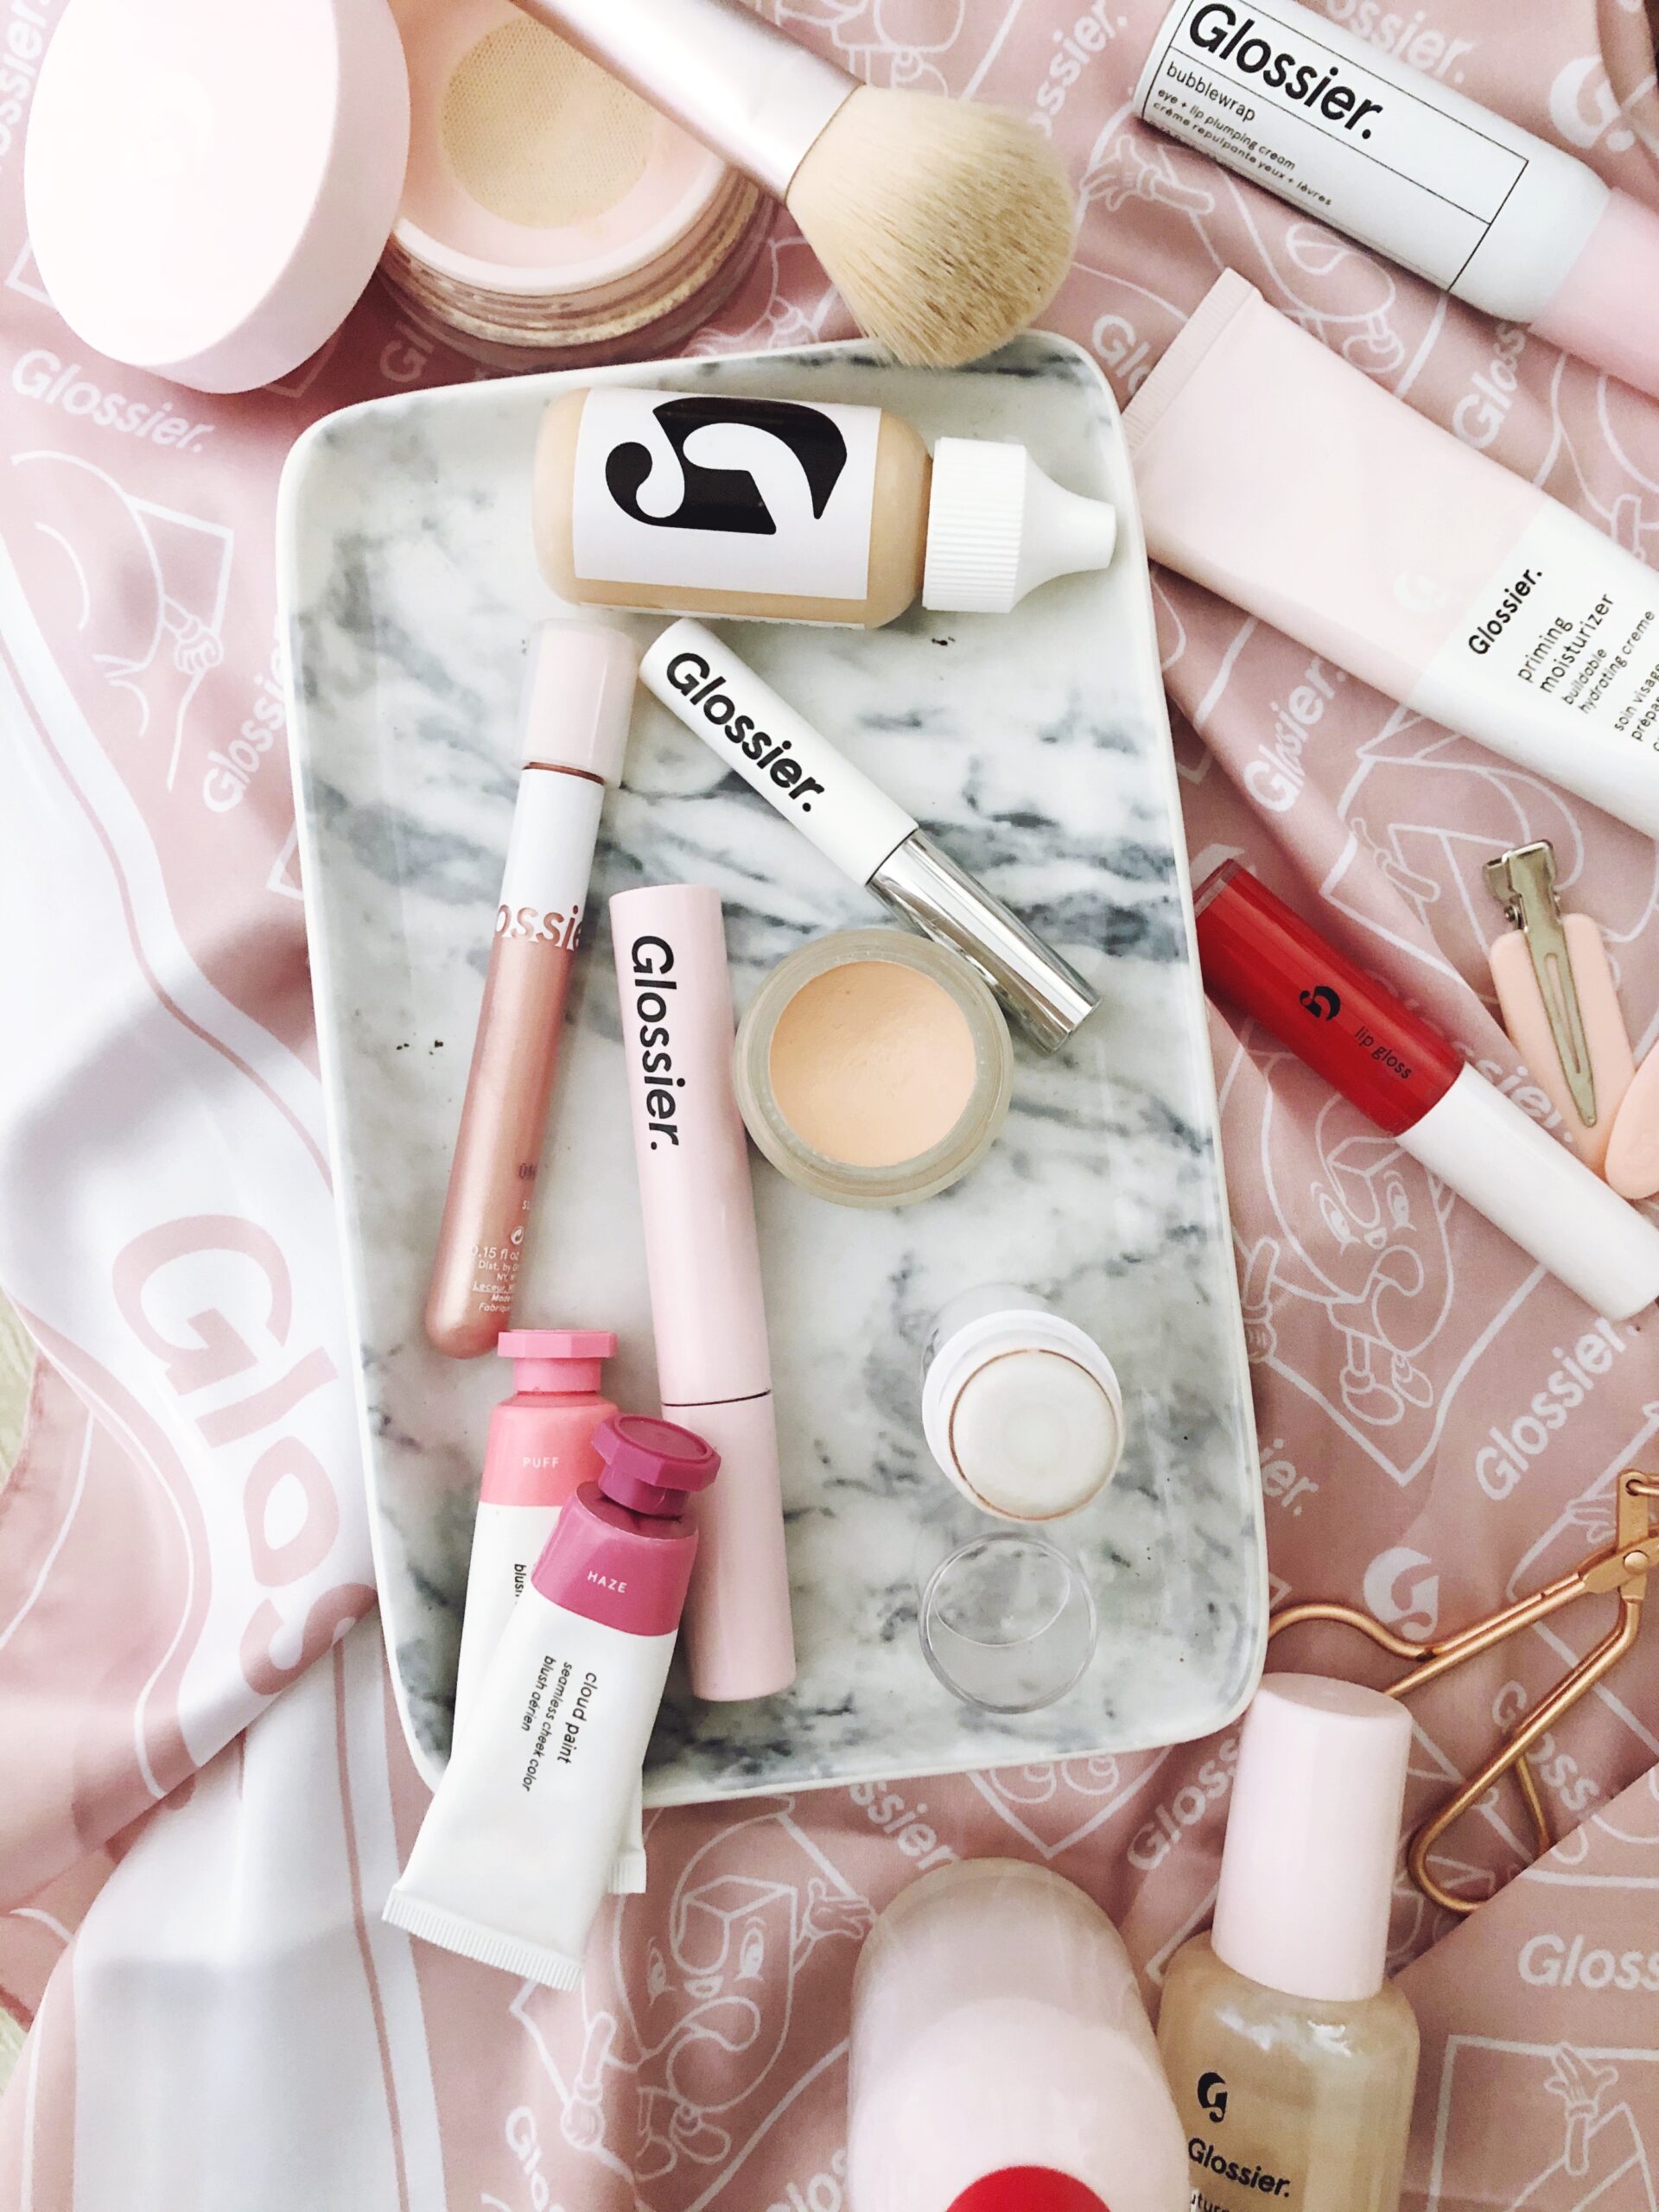 Top 5 Best Minimalist Makeup Brands to Shop - The Beauty Minimalist